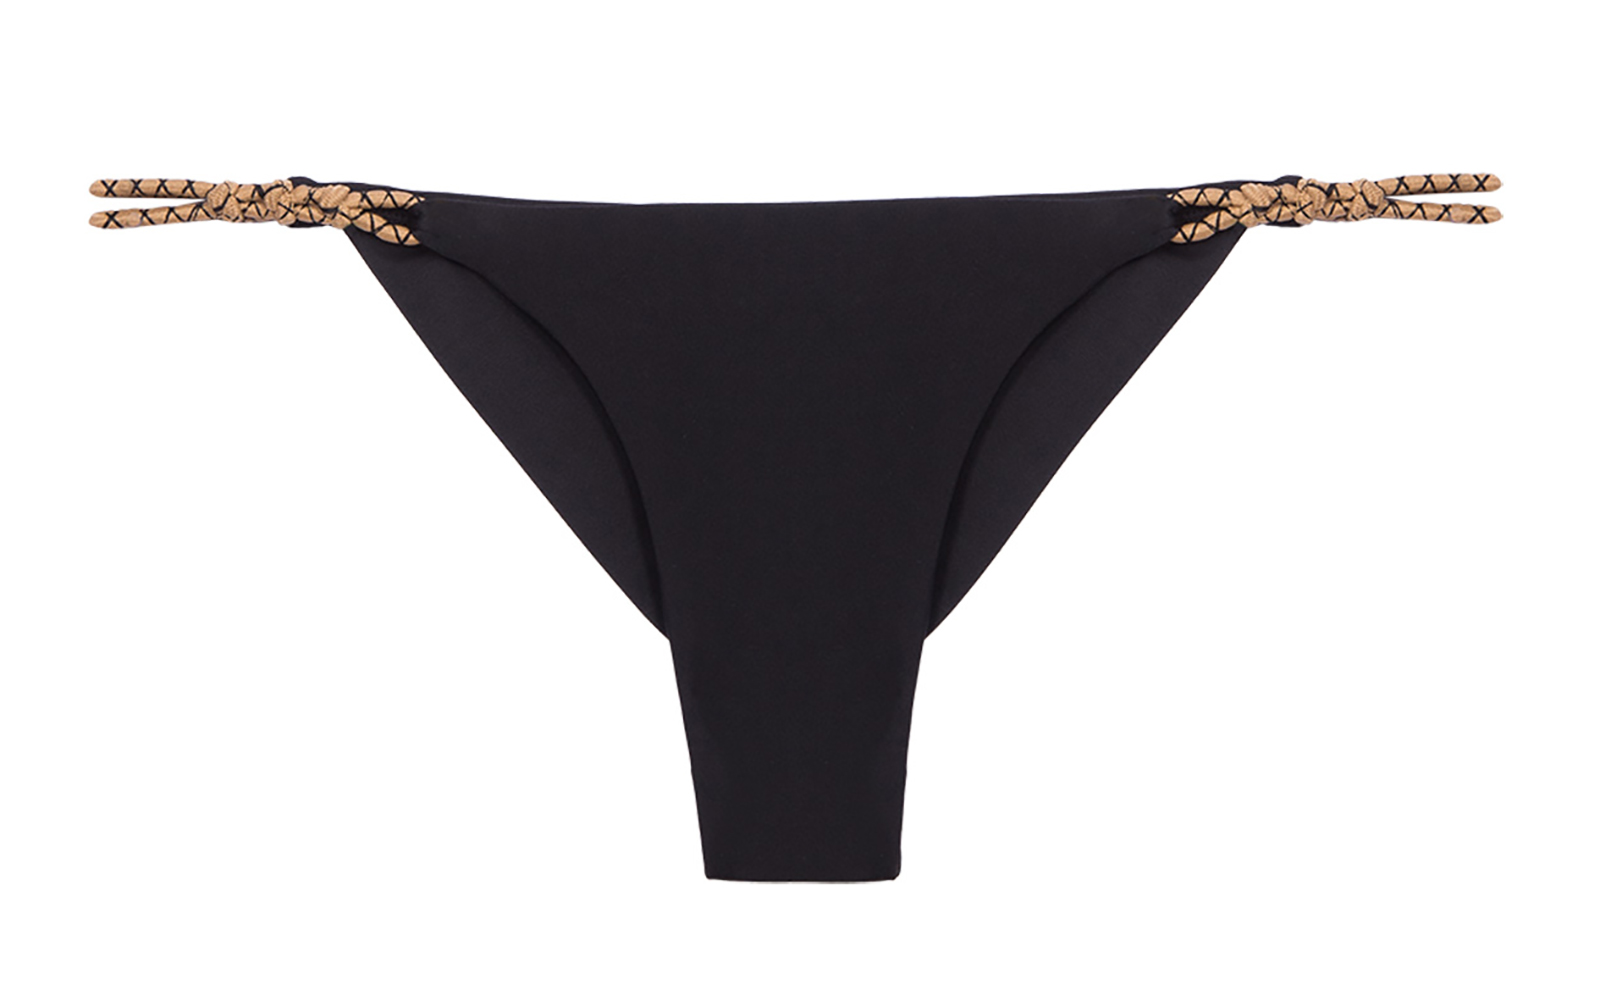 Luxurious Black Brazilian Bikini Bottom With Rope Leather Ties Bottom